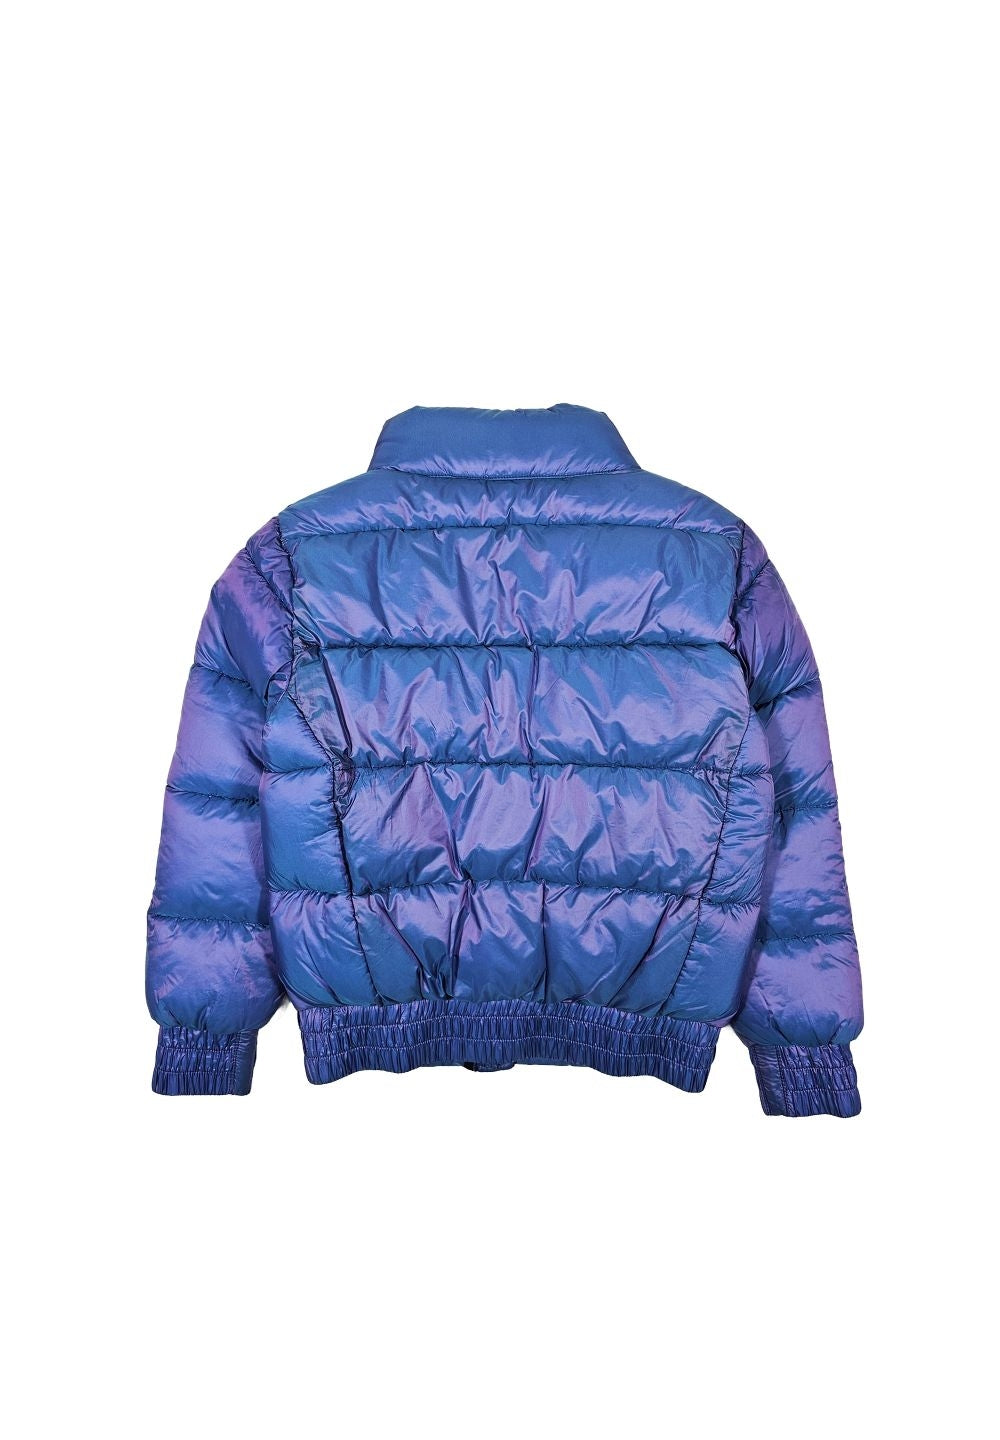 Iridescent purple jacket for girls